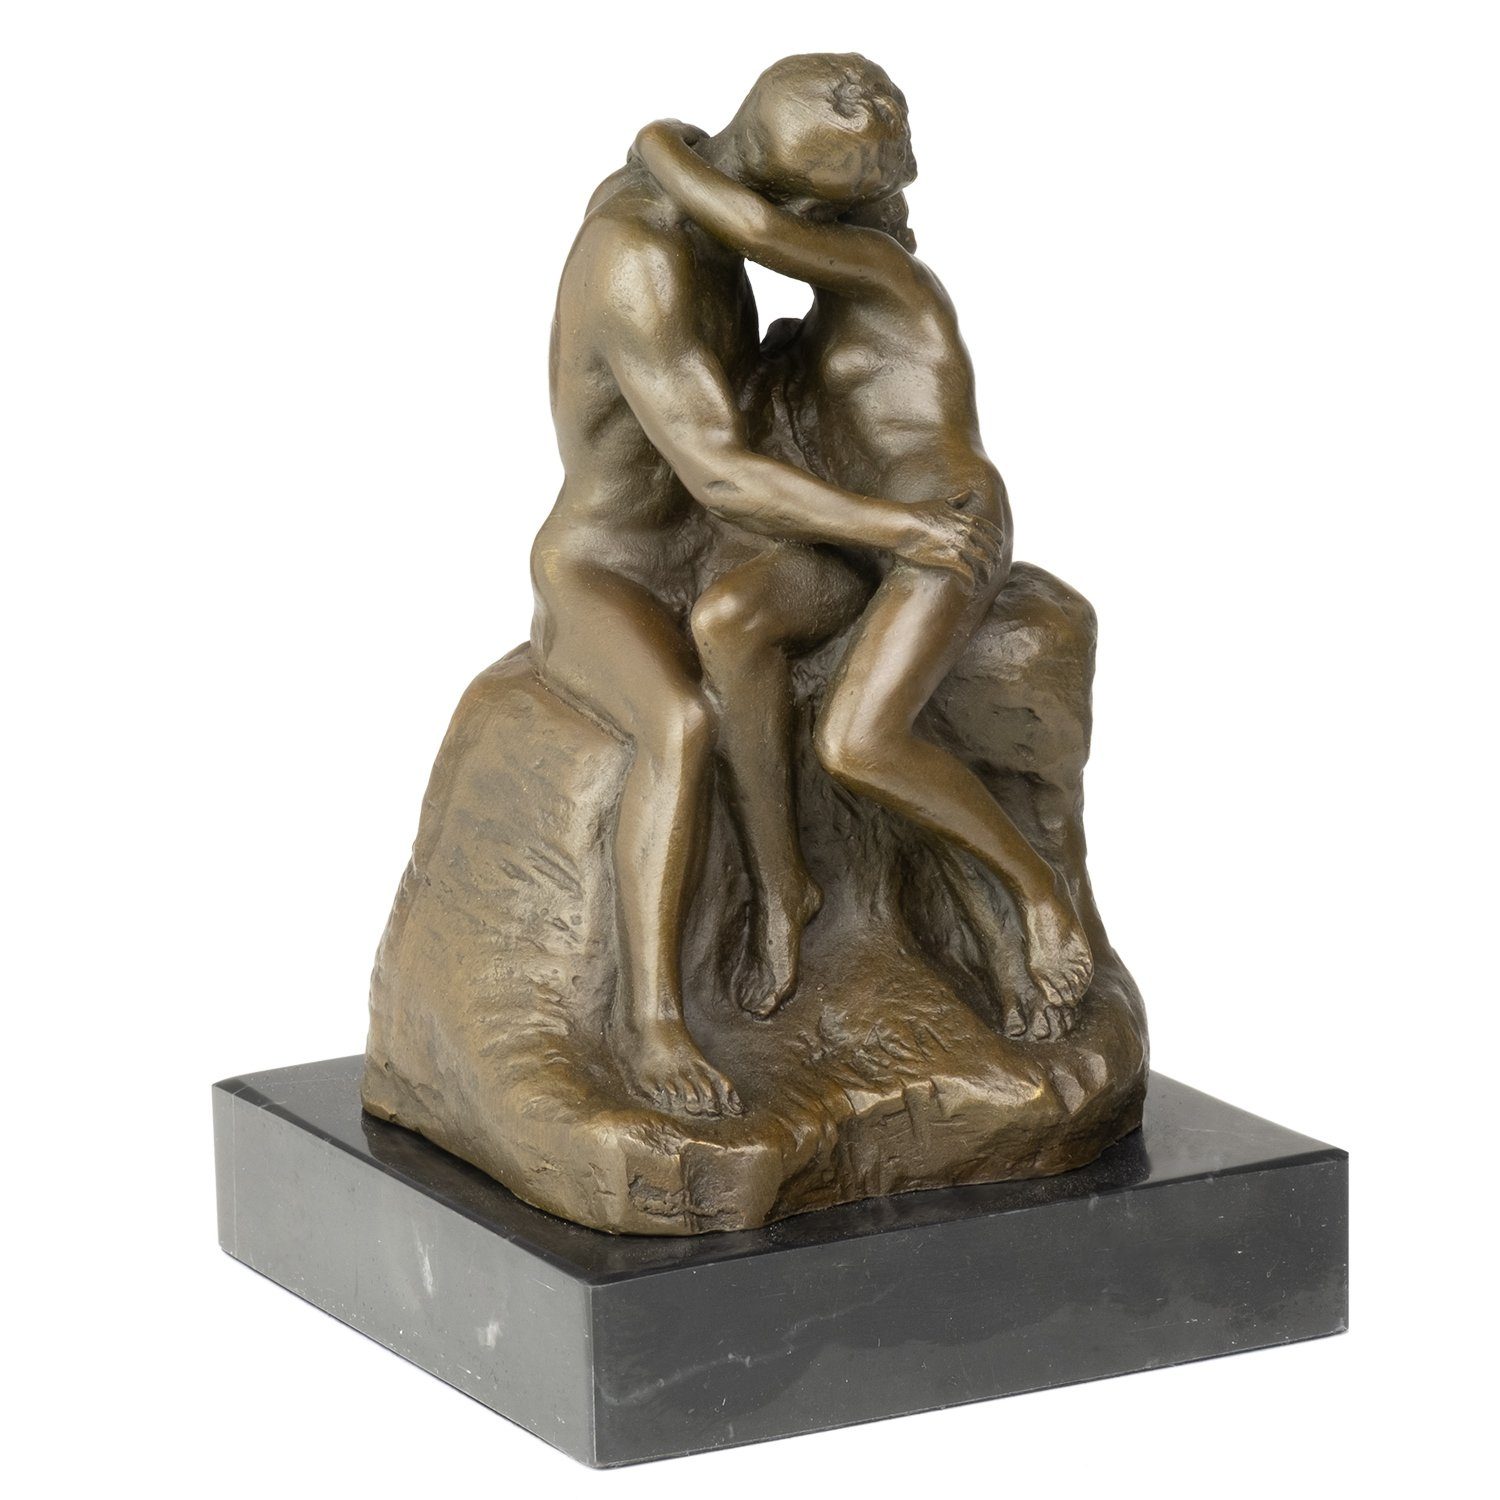 Antik-Stil Moritz von Skulpturen Figuren Kuss Rodin, Skulptur Statue Bronzefigur